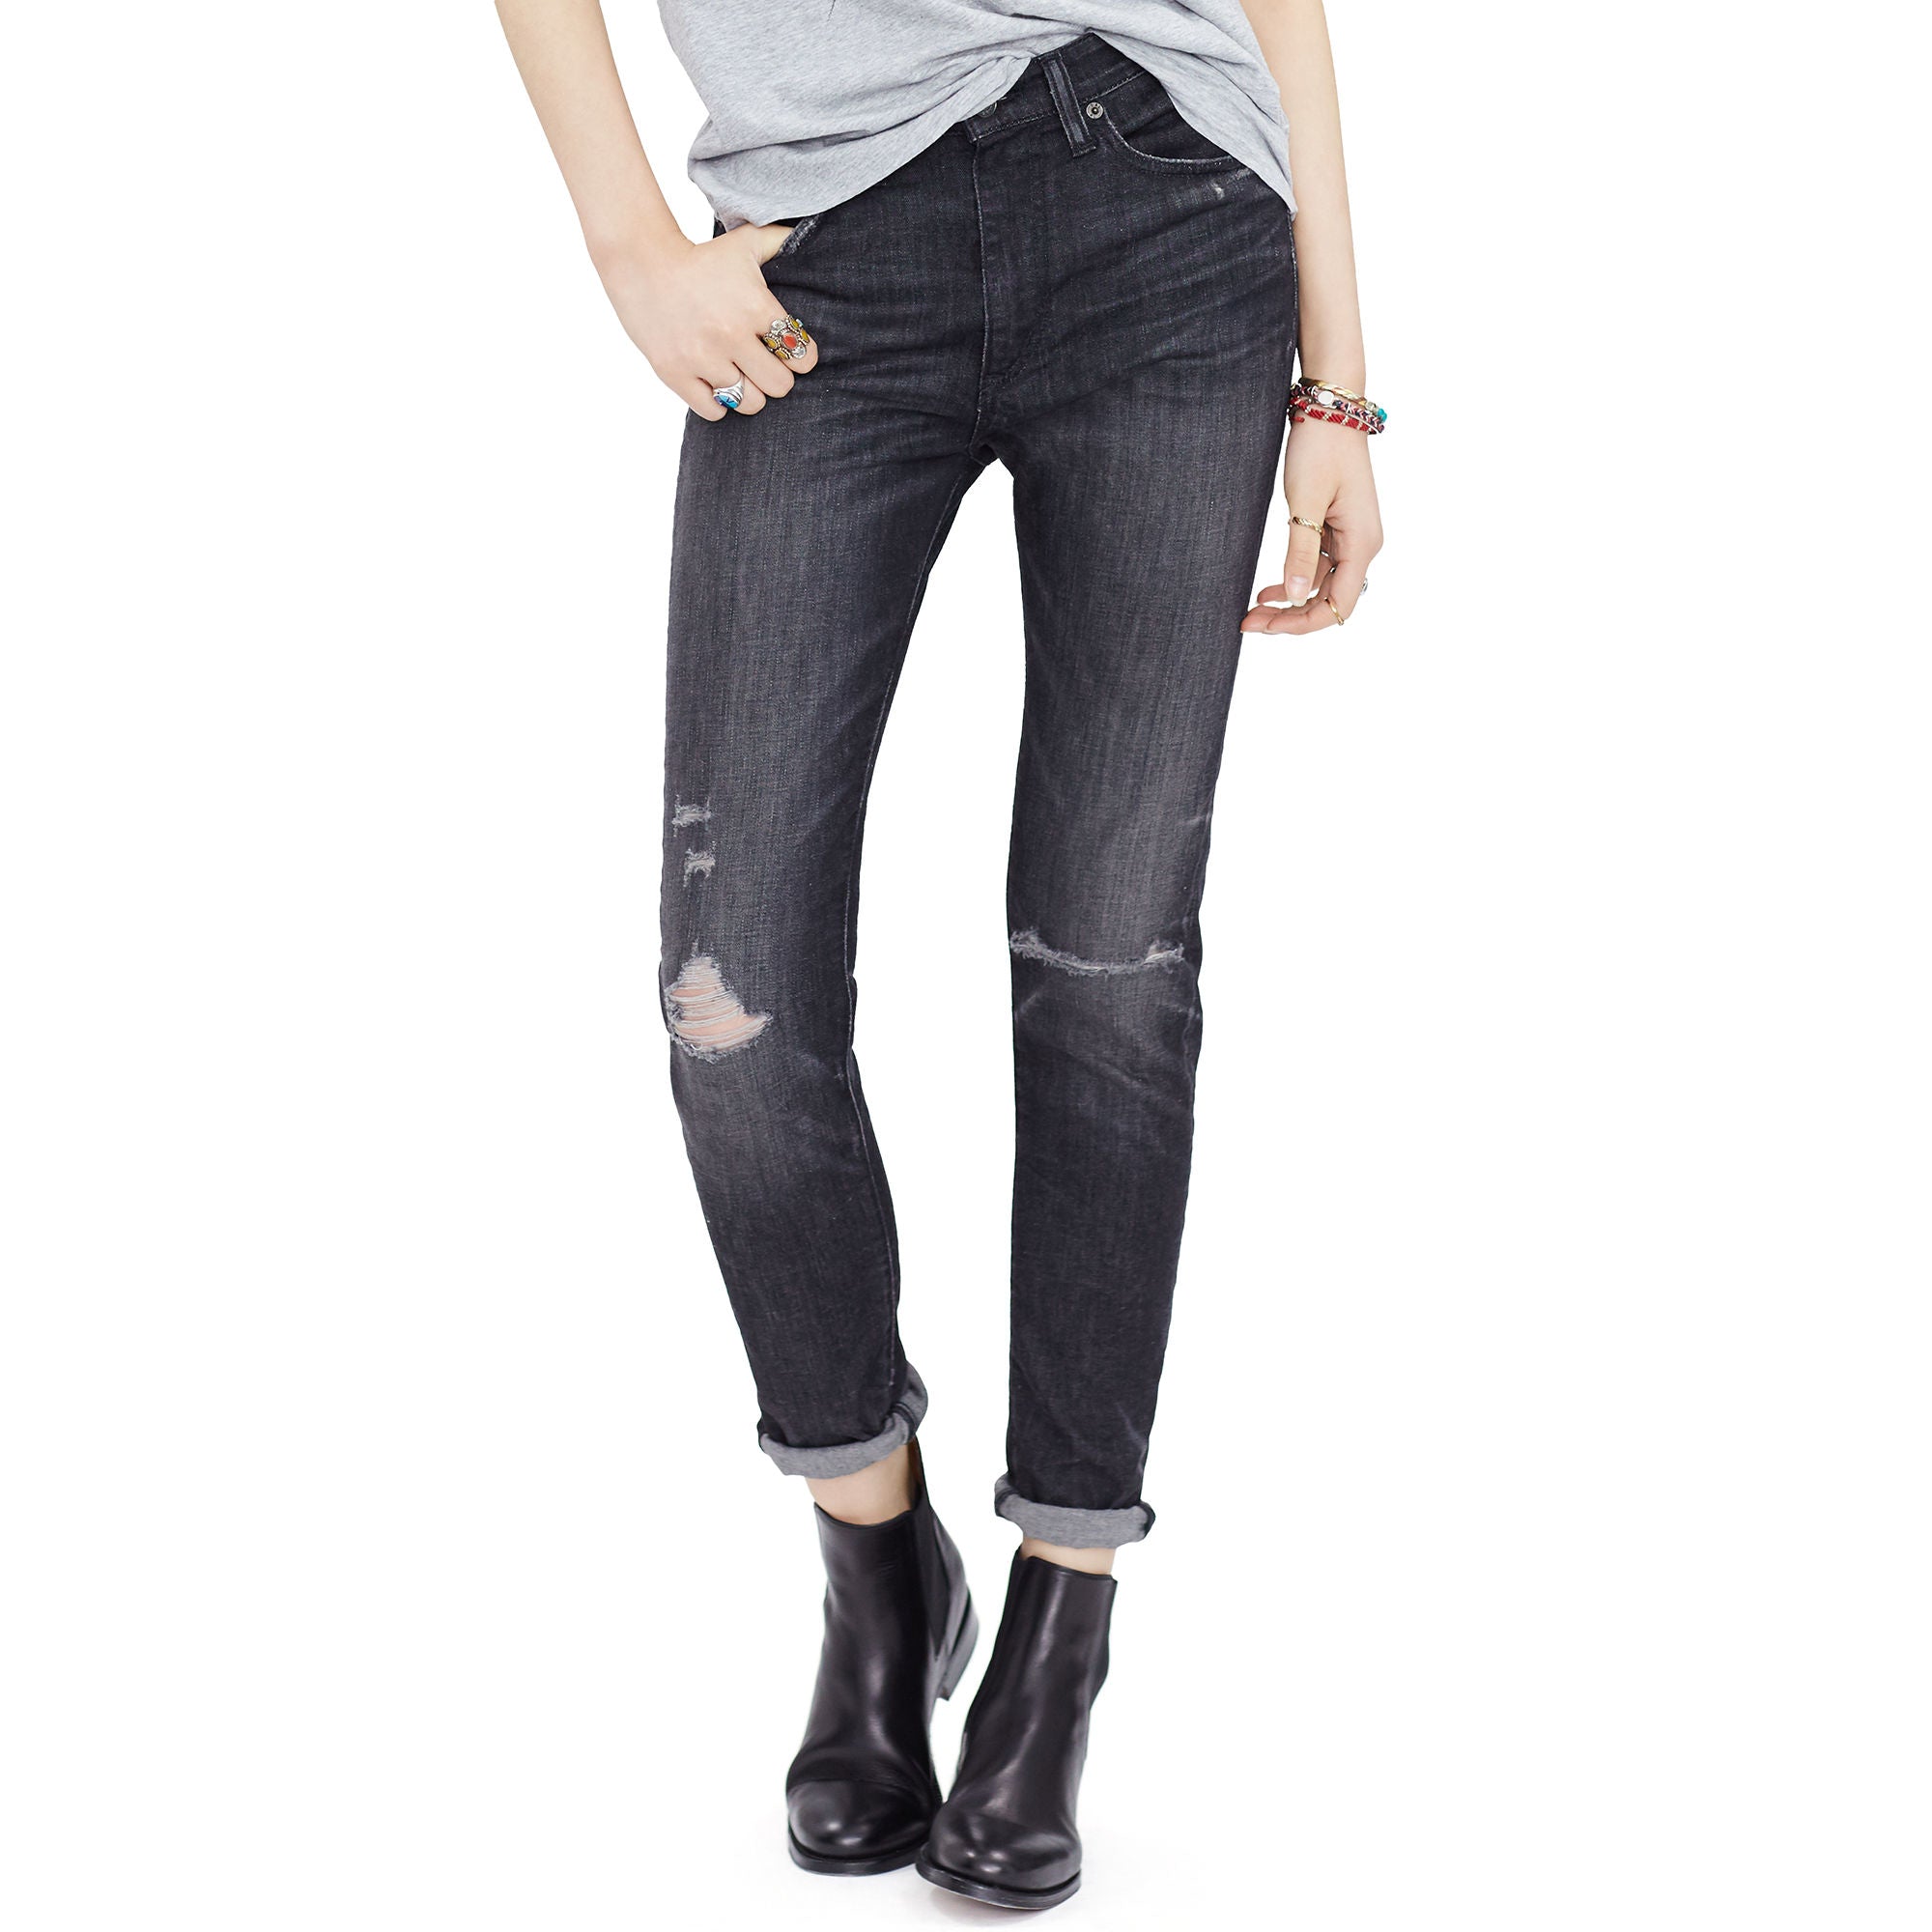 denim & supply ralph lauren jeans